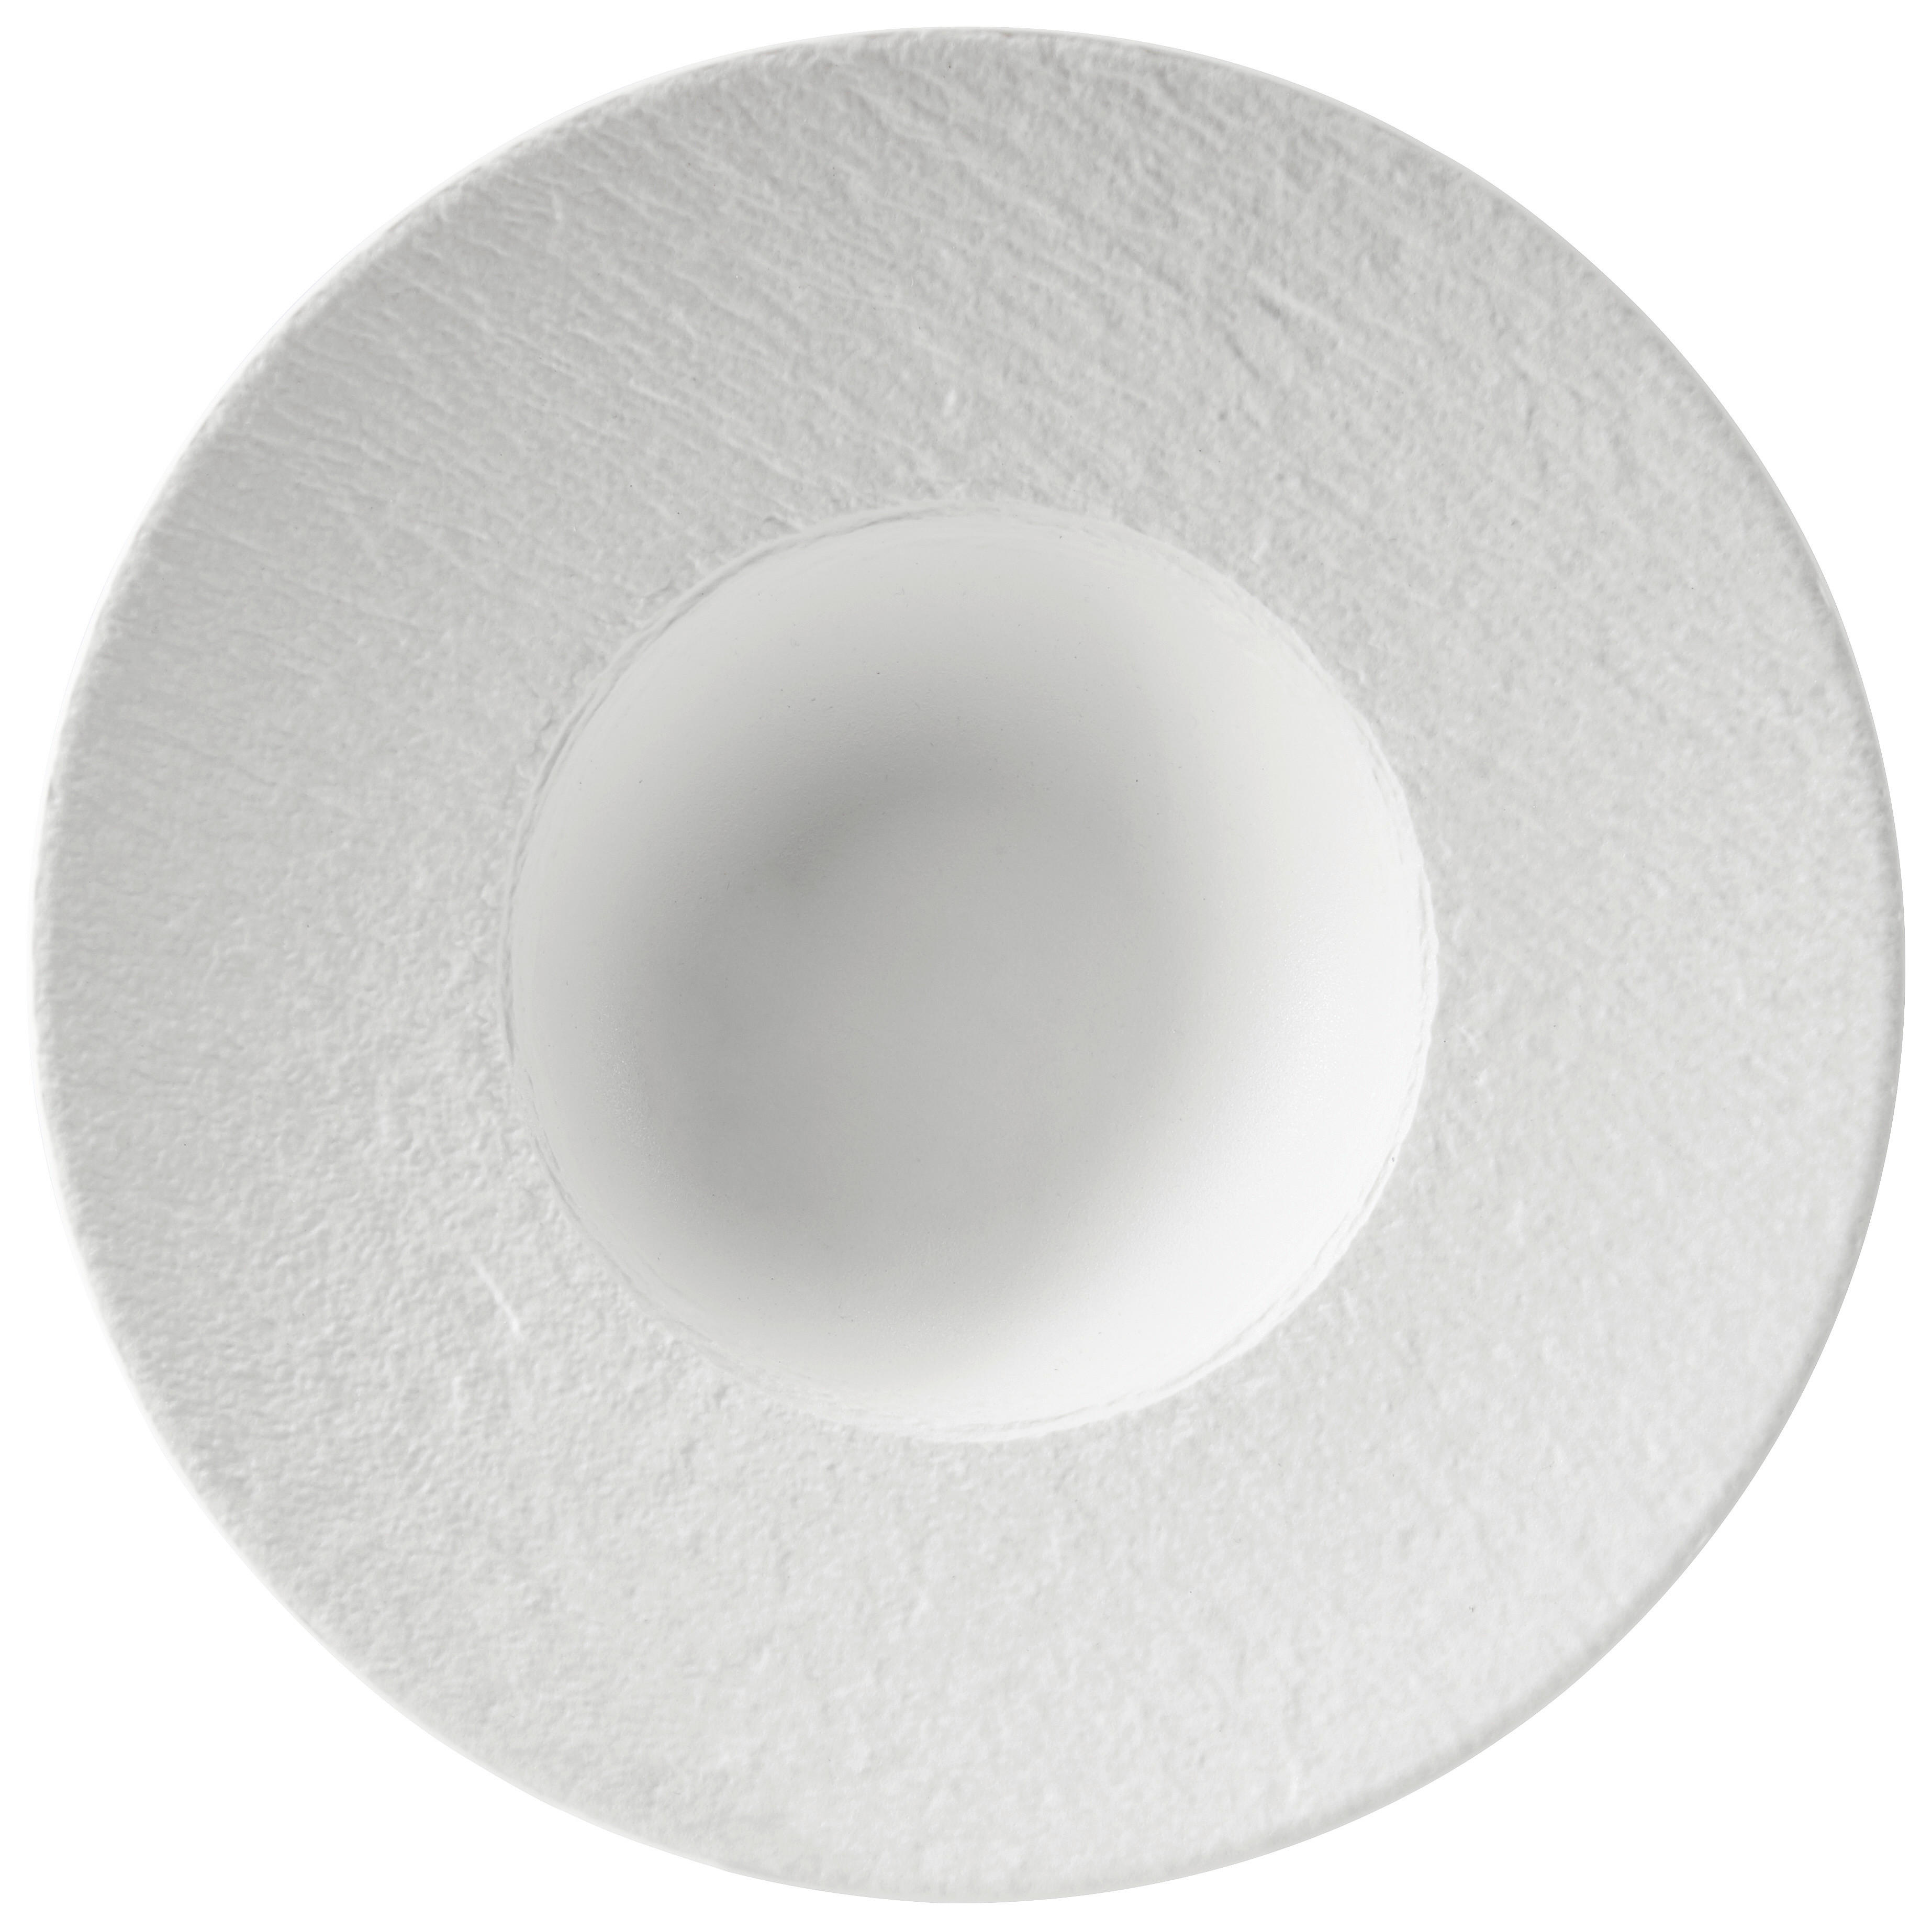 PASTATELLER Porzellan Manufacture Rock blanc  - Weiß, Keramik (29cm) - Villeroy & Boch